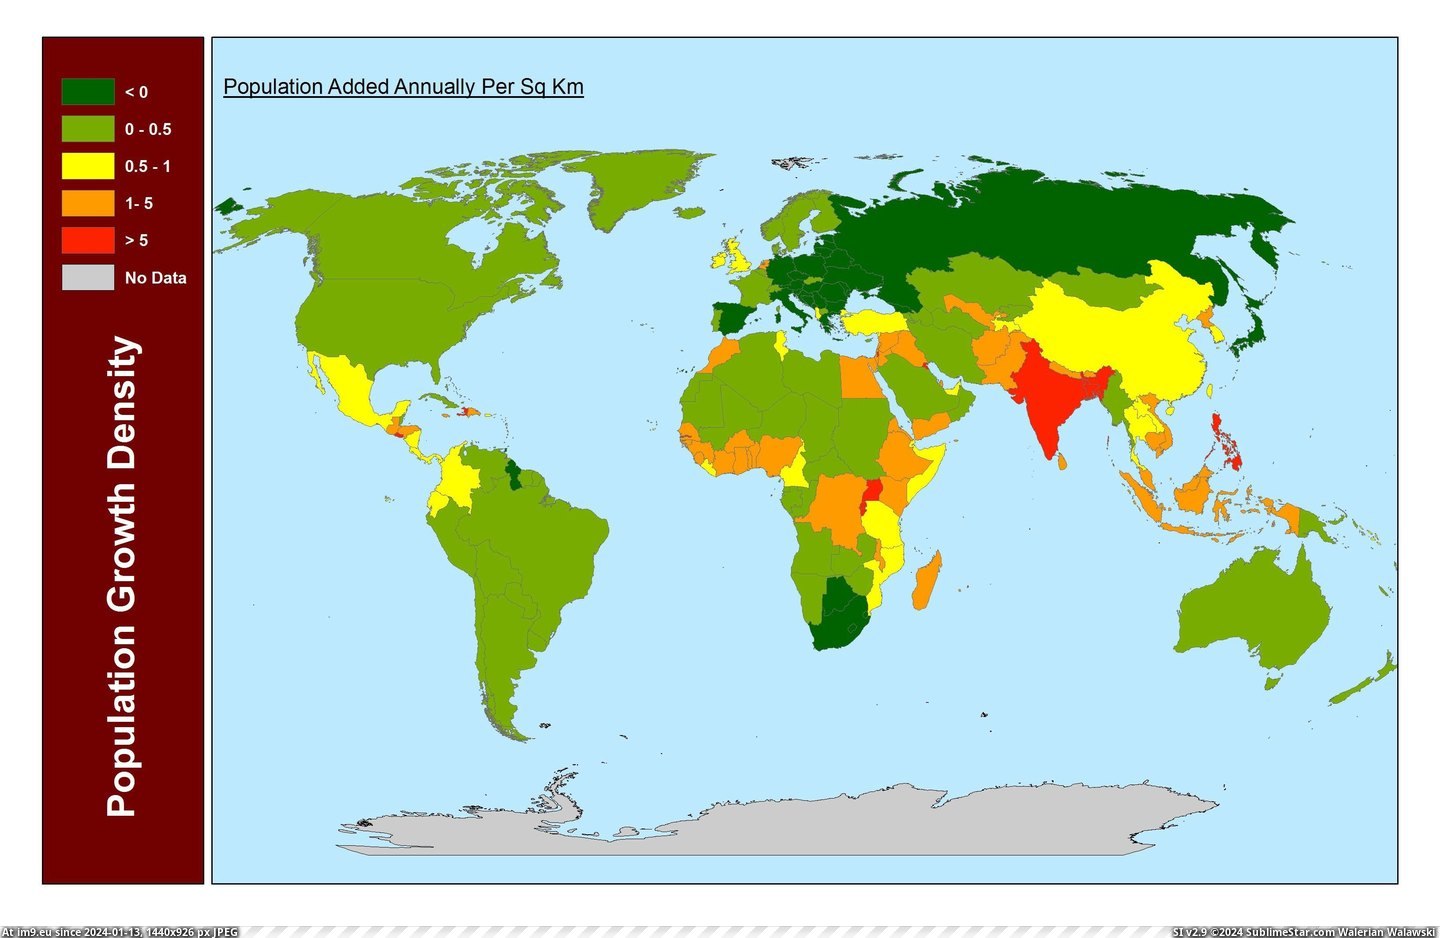 #World #Density #Growth #Population [Mapporn] World Population Growth Density [3264x2112] [OC] Pic. (Изображение из альбом My r/MAPS favs))